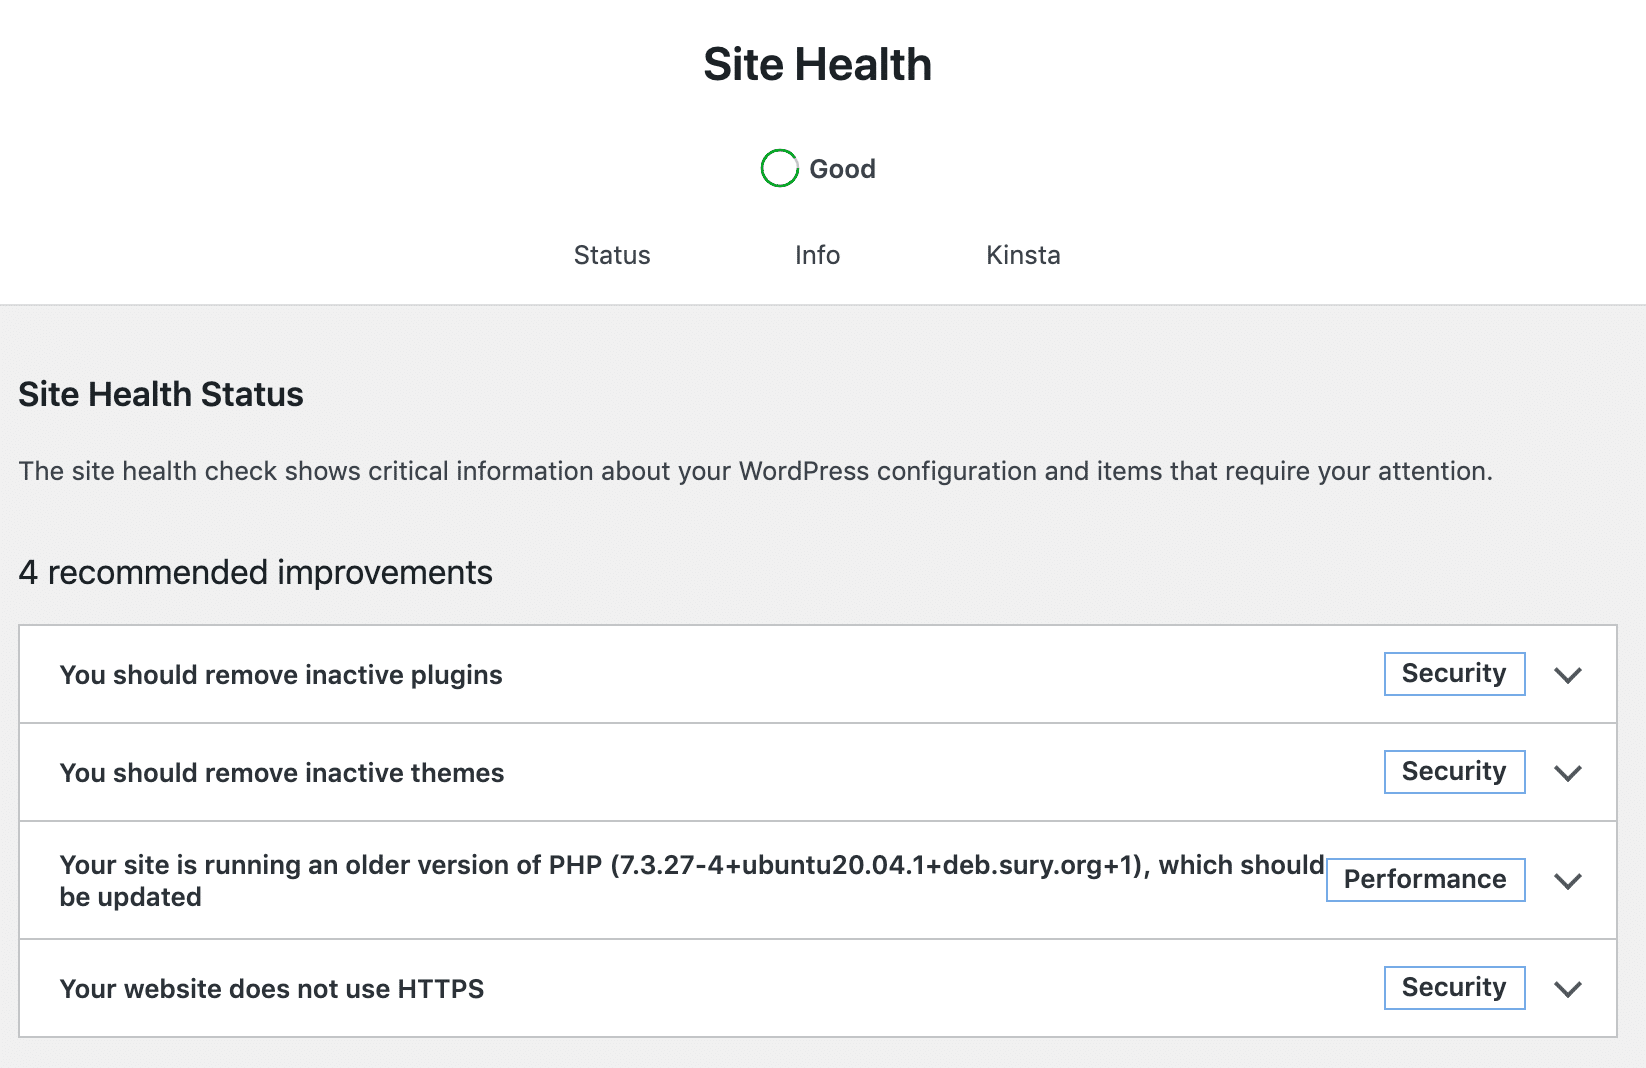 A custom tab added to the Site Health navigation menu.